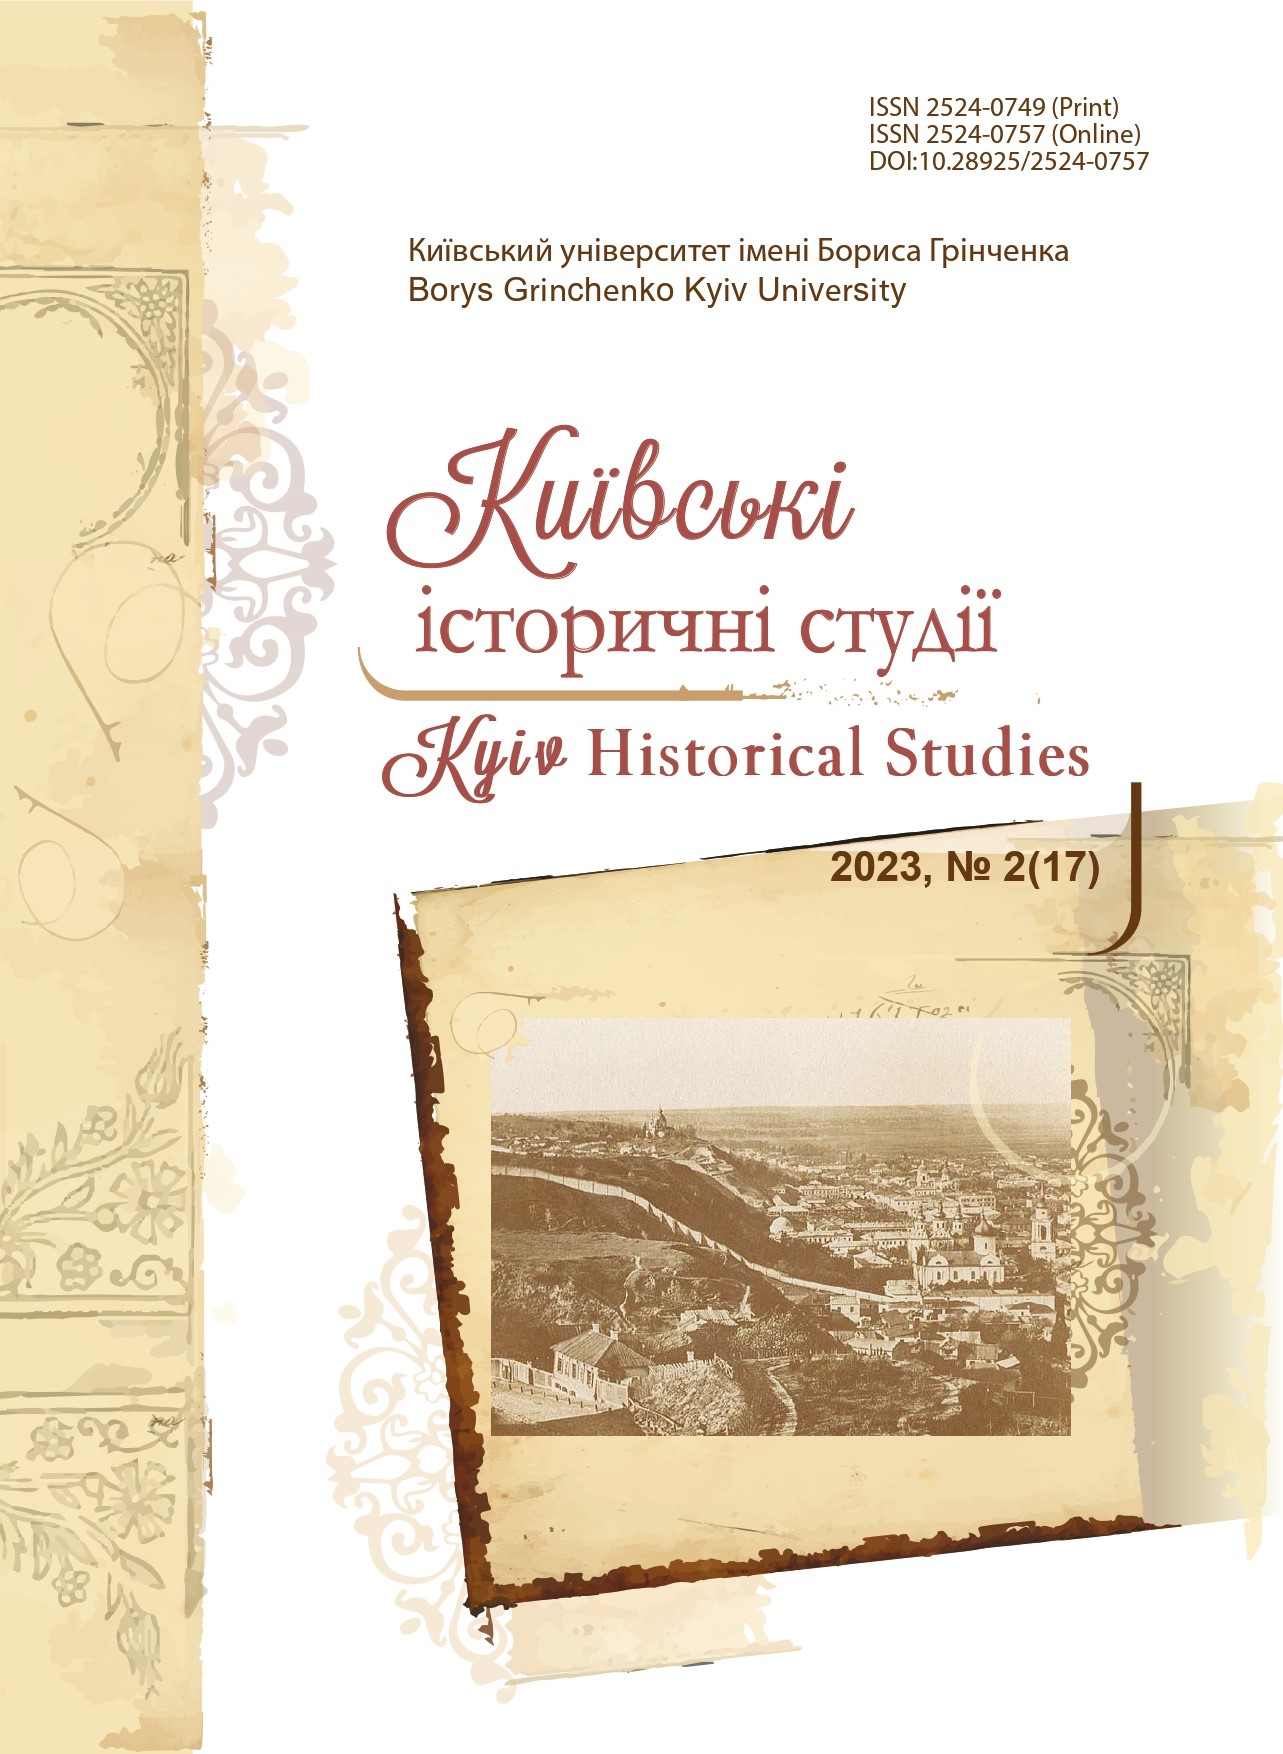 					View No. 2 (17) (2023): Kyiv Historical Studies
				